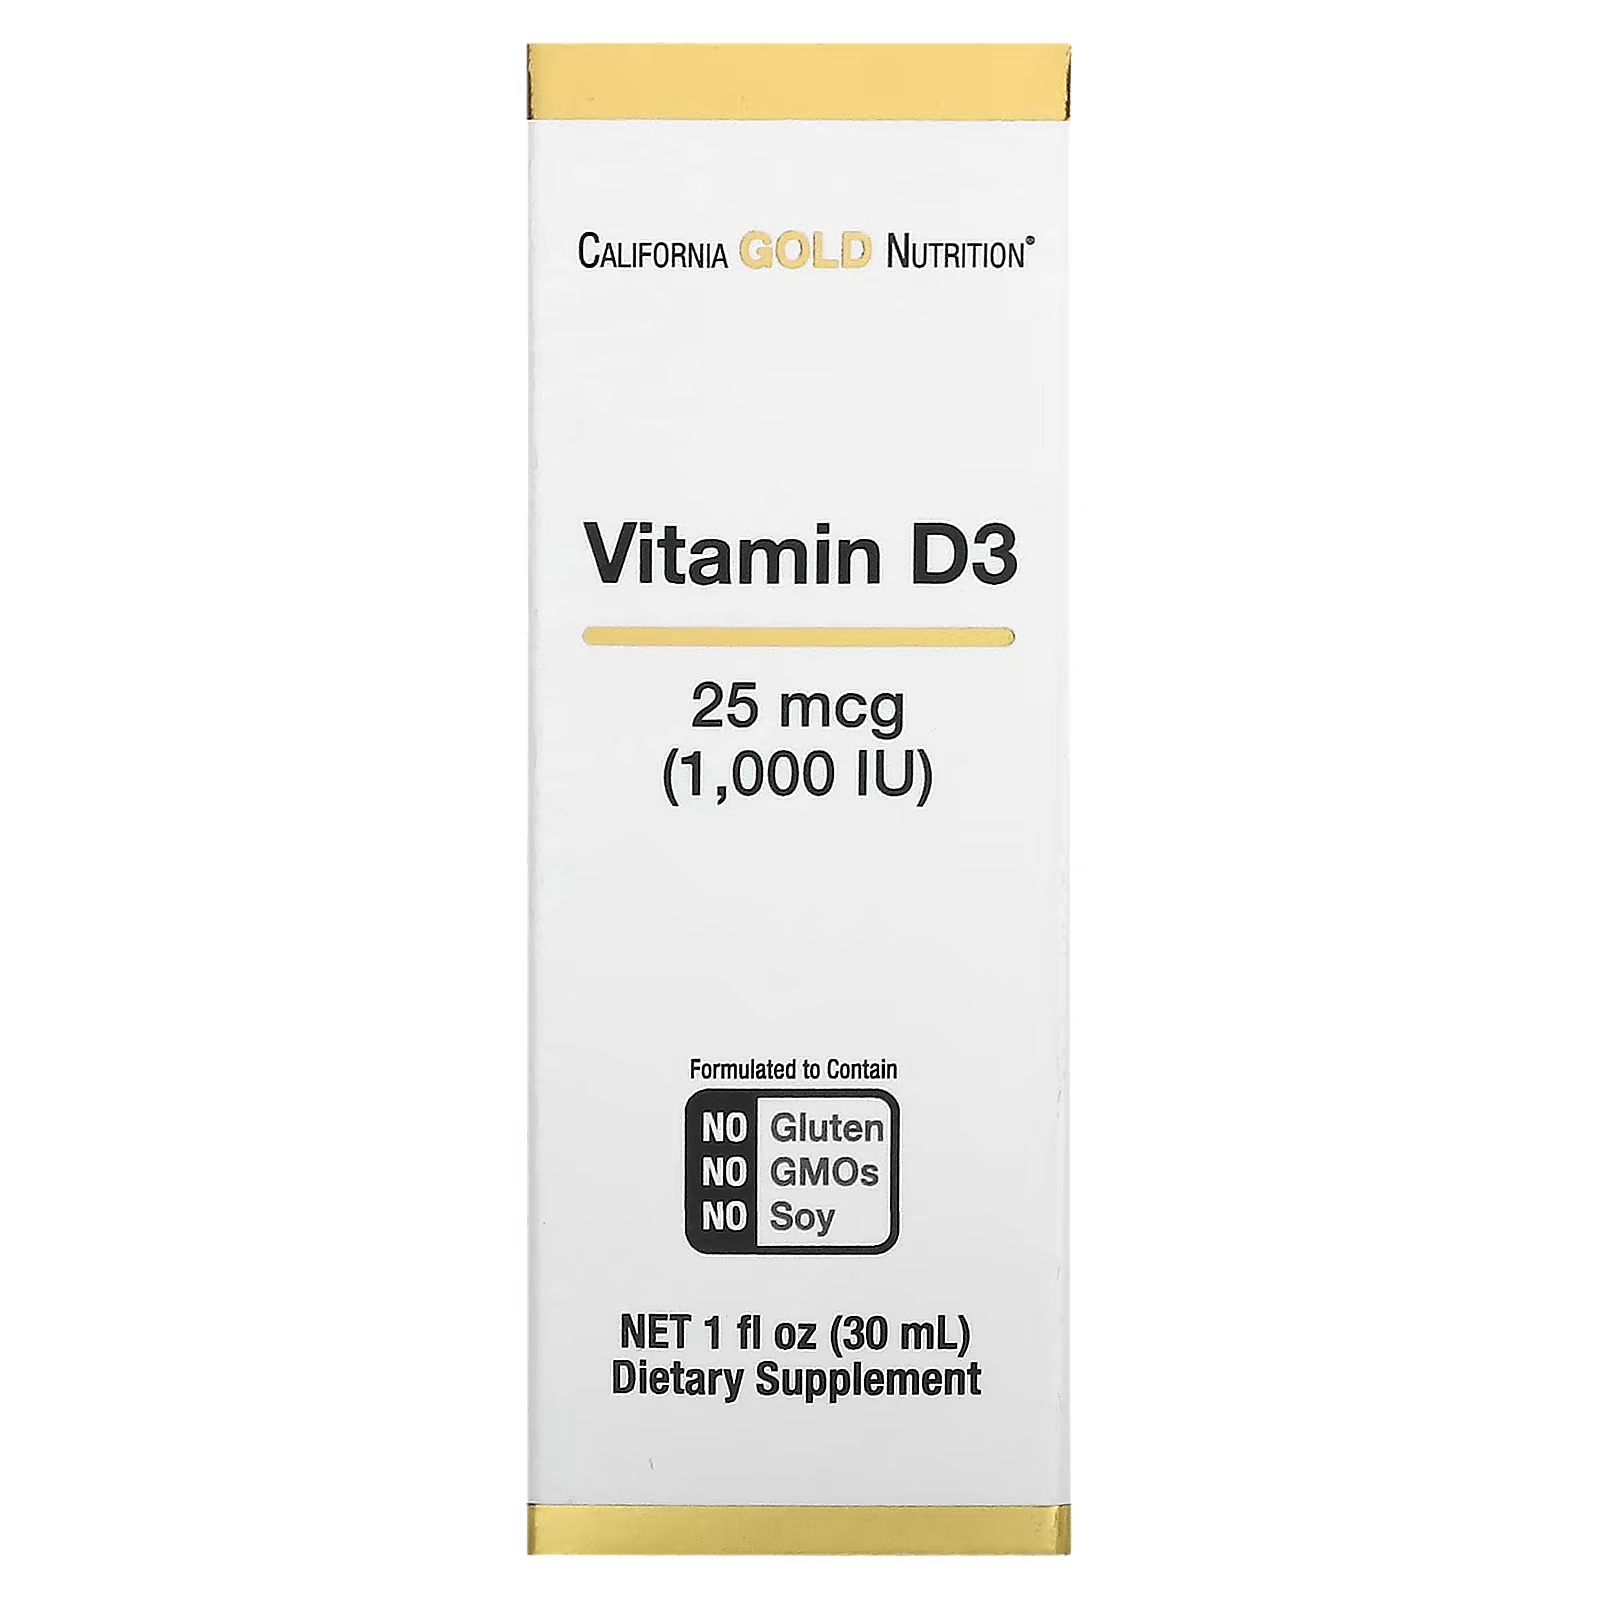 Витамин D3 25 мкг (1000 МЕ) 1 жидкая унция (30 мл) California Gold Nutrition витамины d3 и k2 california gold nutrition 25 мкг 1000 ме 30 мл